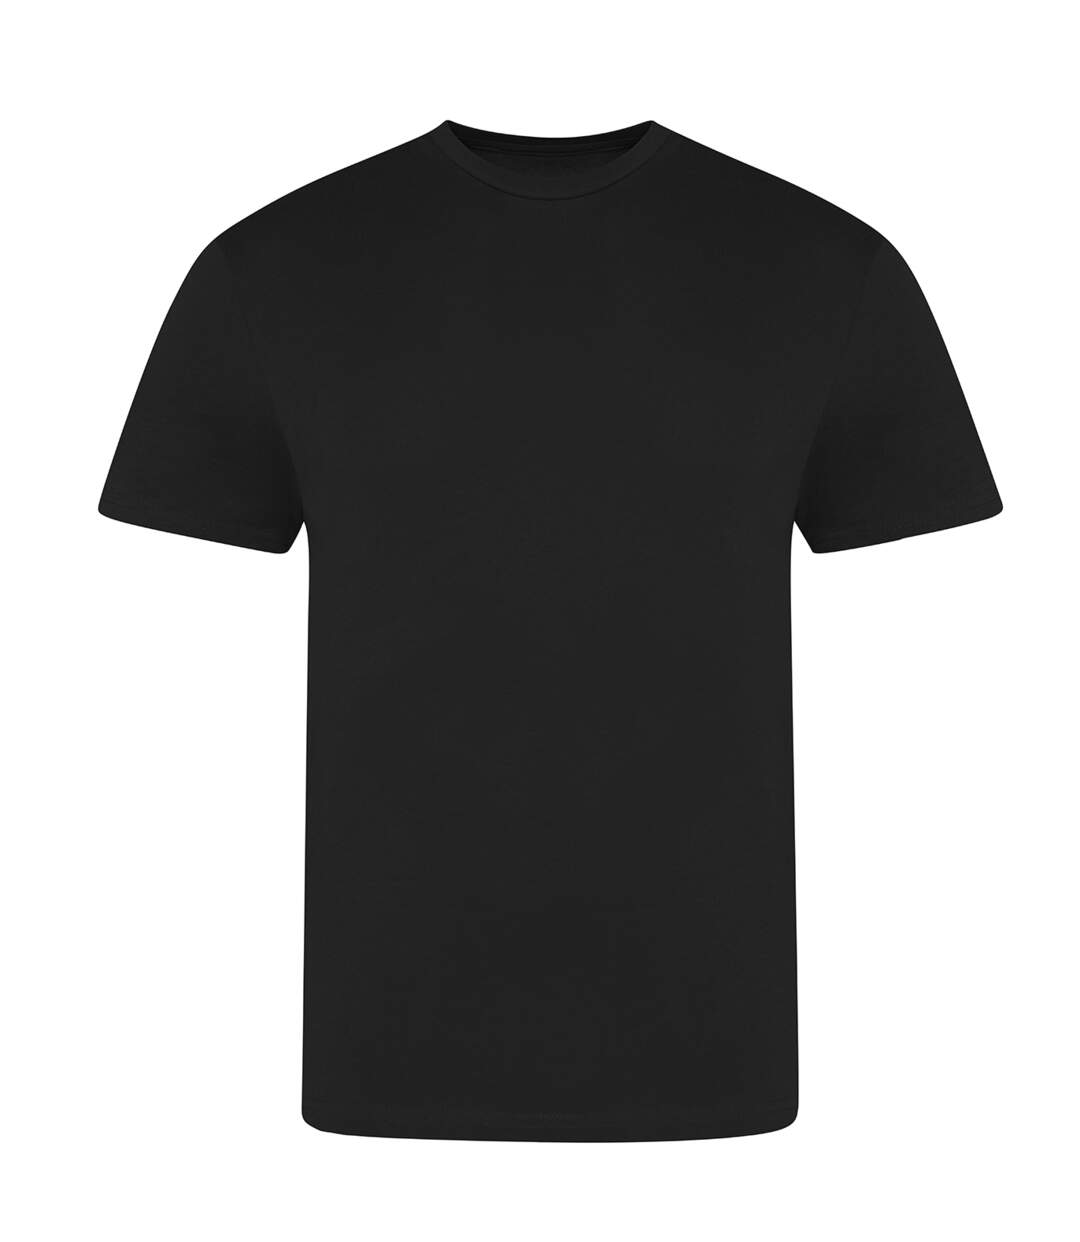 Awdis T-Shirt unisexe adulte The 100 (Noir profond) - UTRW7727